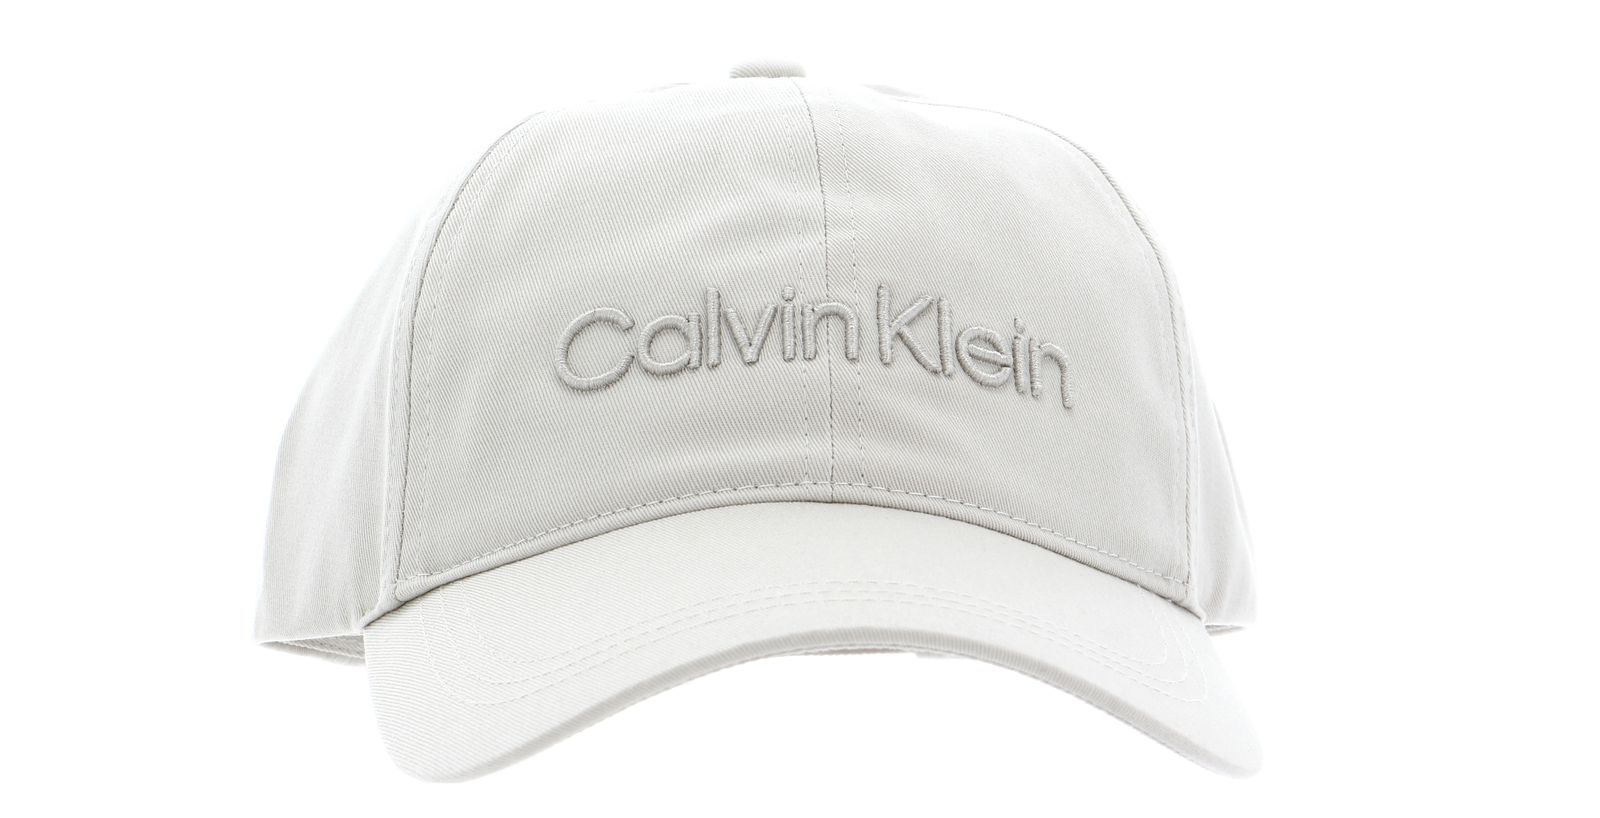 Beige | Calvin | Embroidery & Calvin accessories Cap bags, modeherz Klein purses Buy online